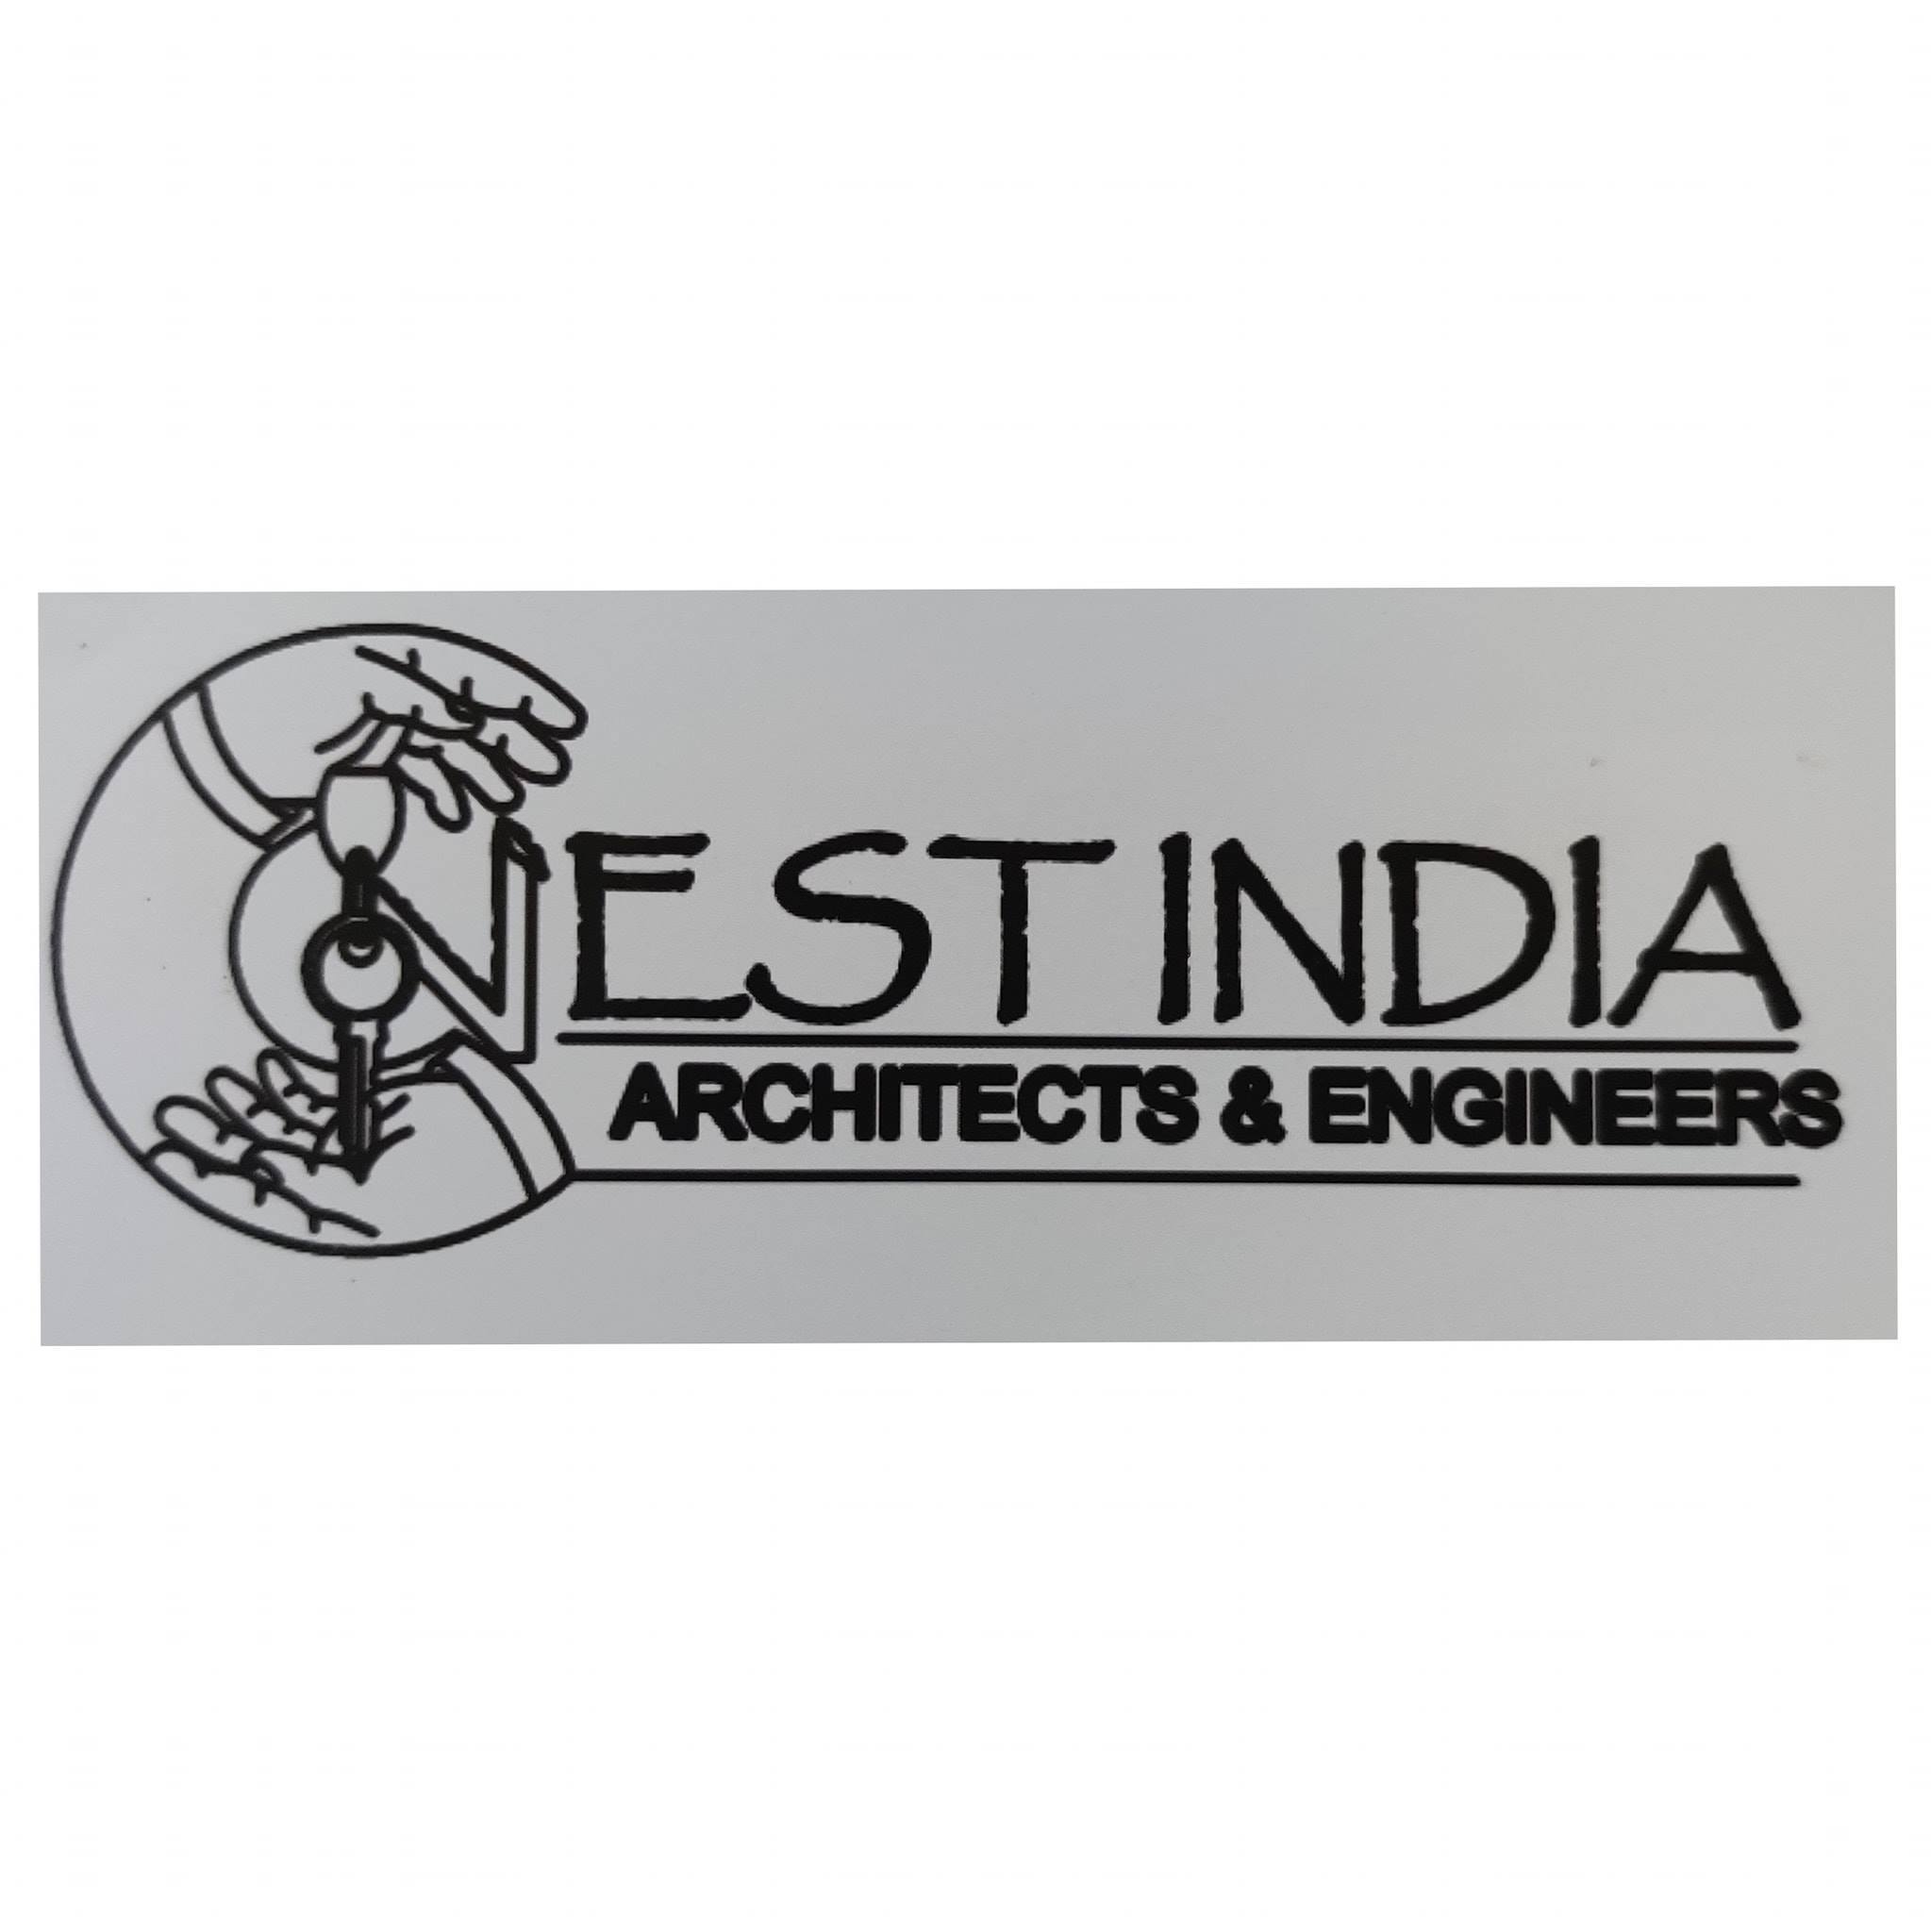 Nest India Architects and Engineers Logo